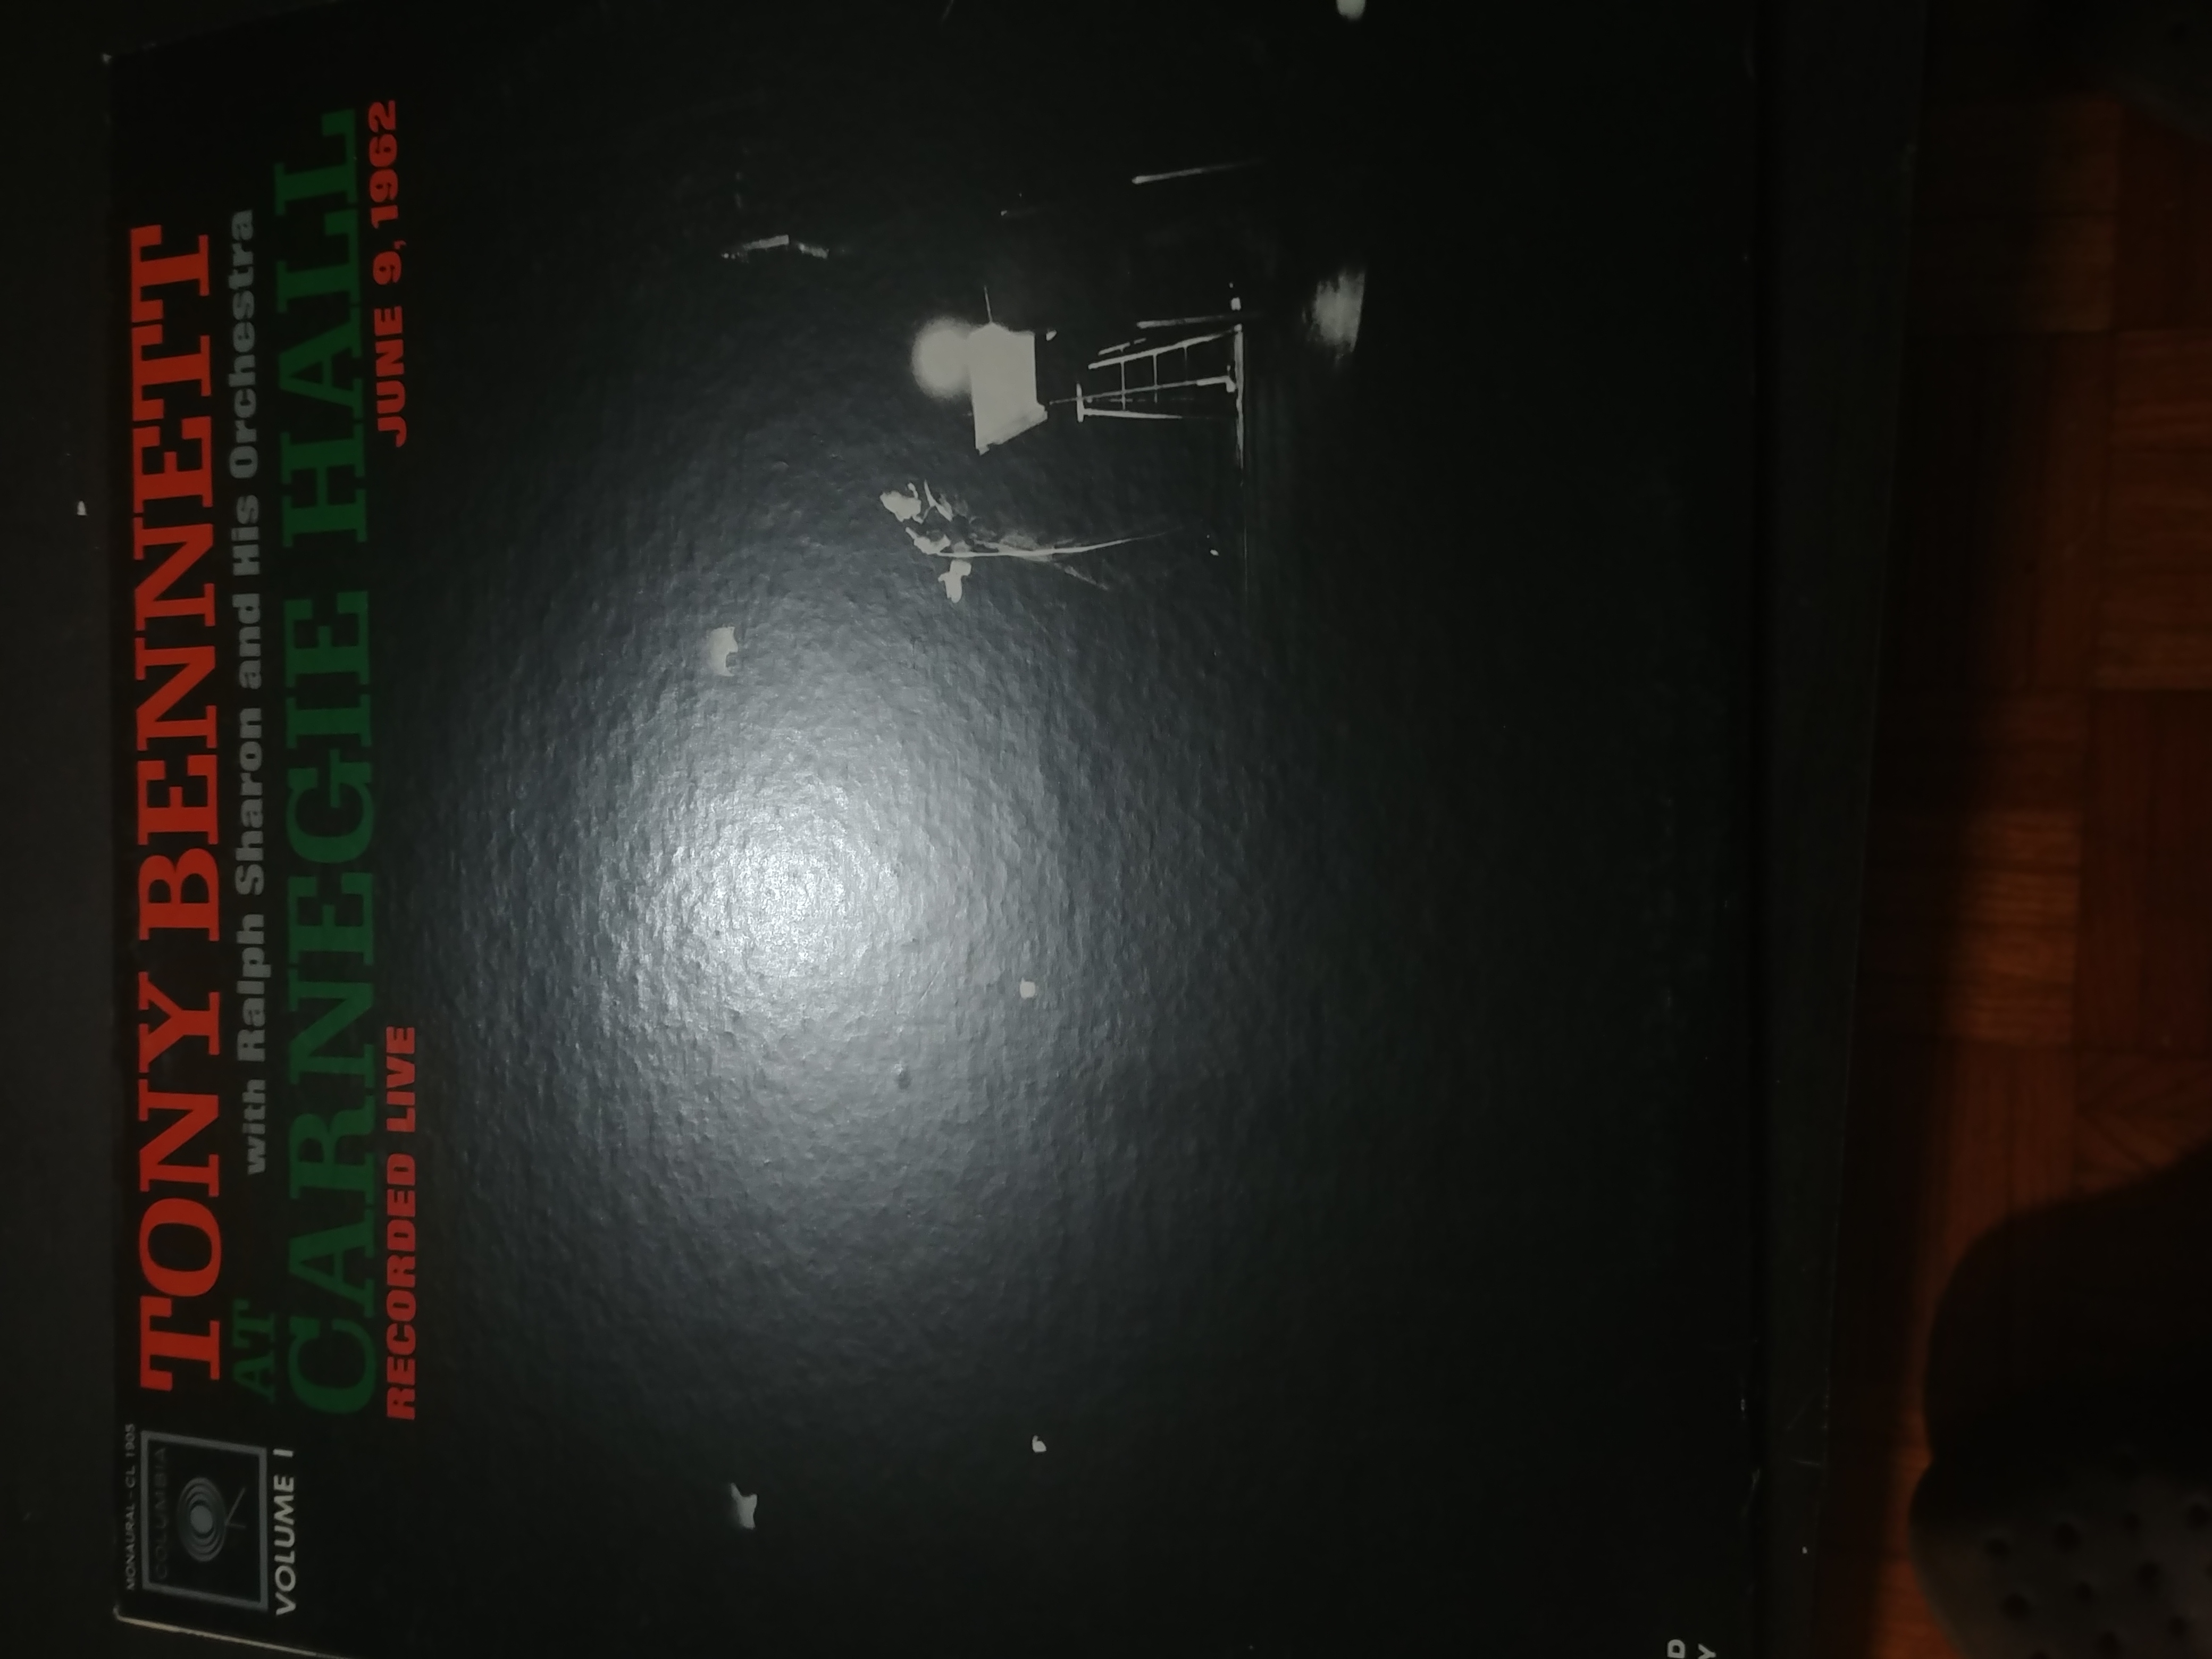 Acheter disque vinyle Tony Bennett At Carnegie Hall a vendre